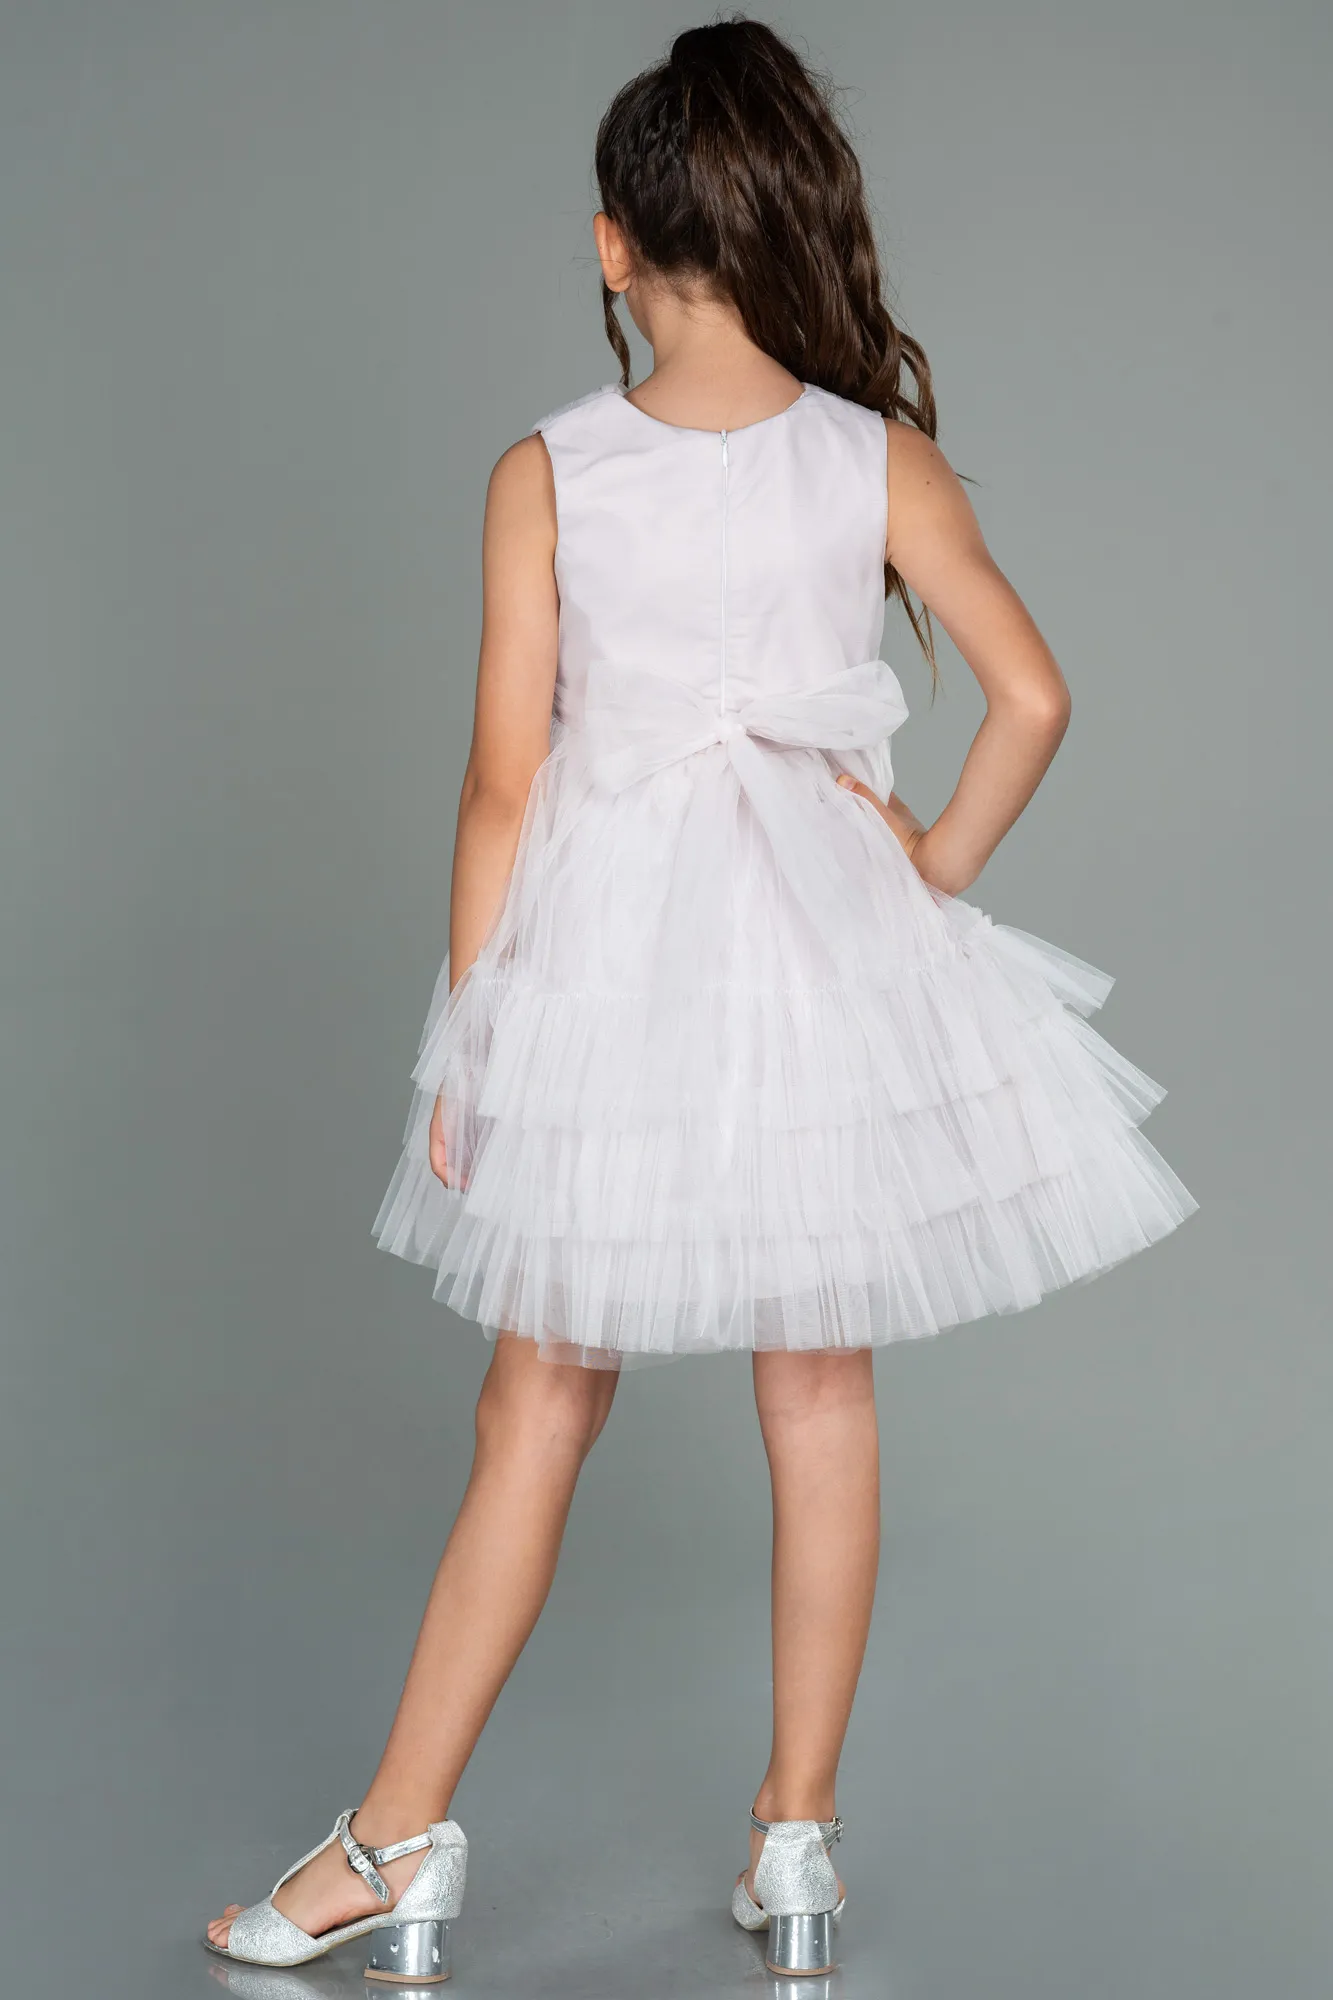 Powder Color-Short Girl Dress ABK1769